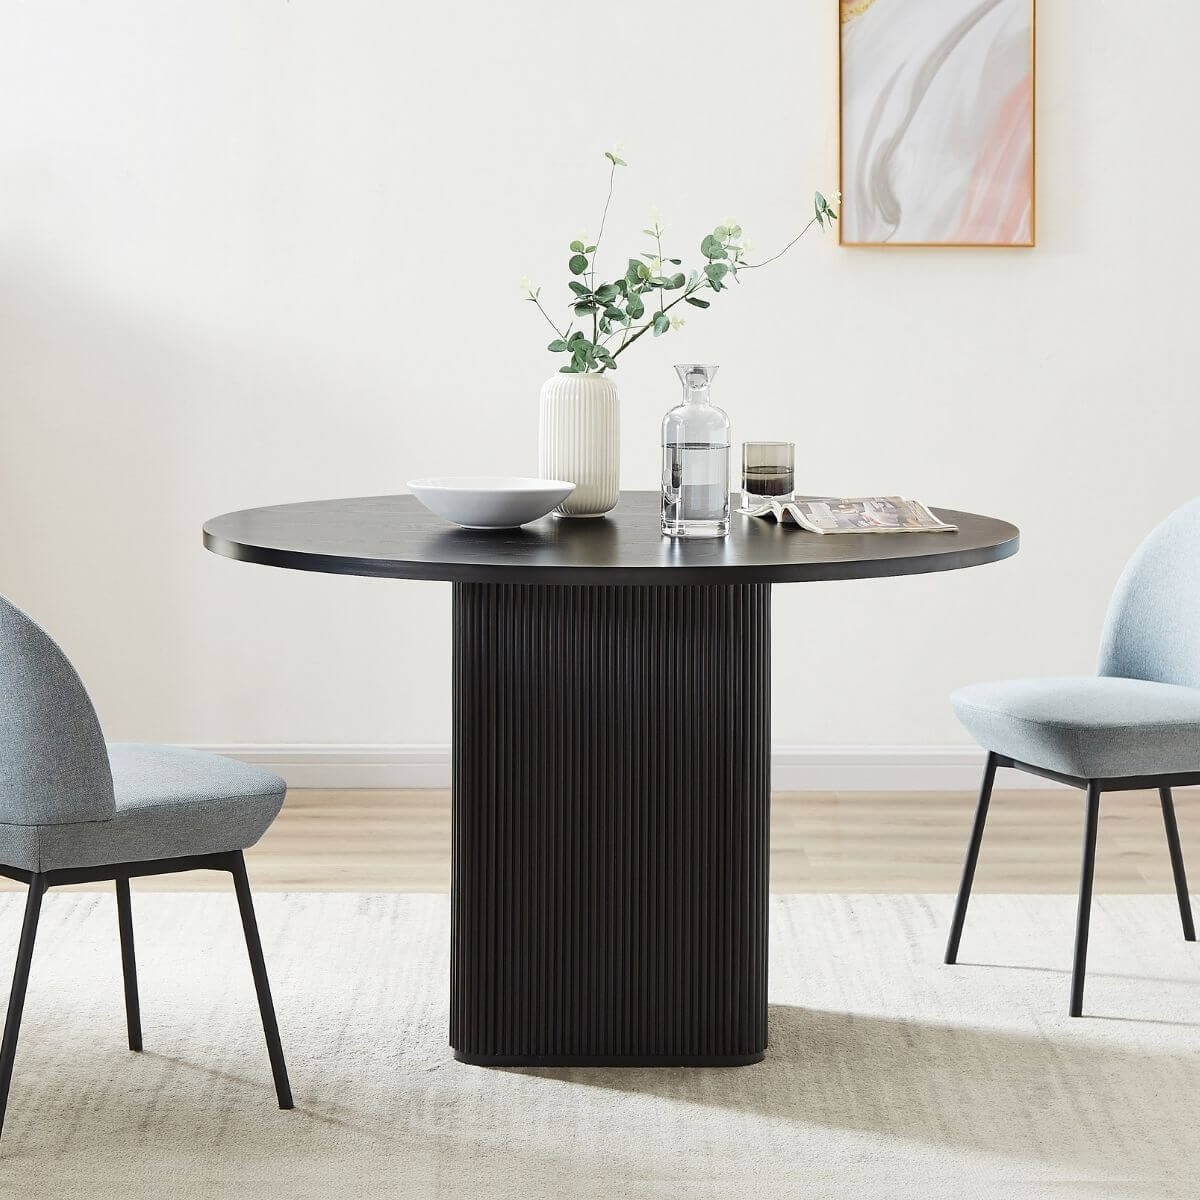 Kate 4-Seater Black Dining Table - Elegant & Sturdy-Upinteriors